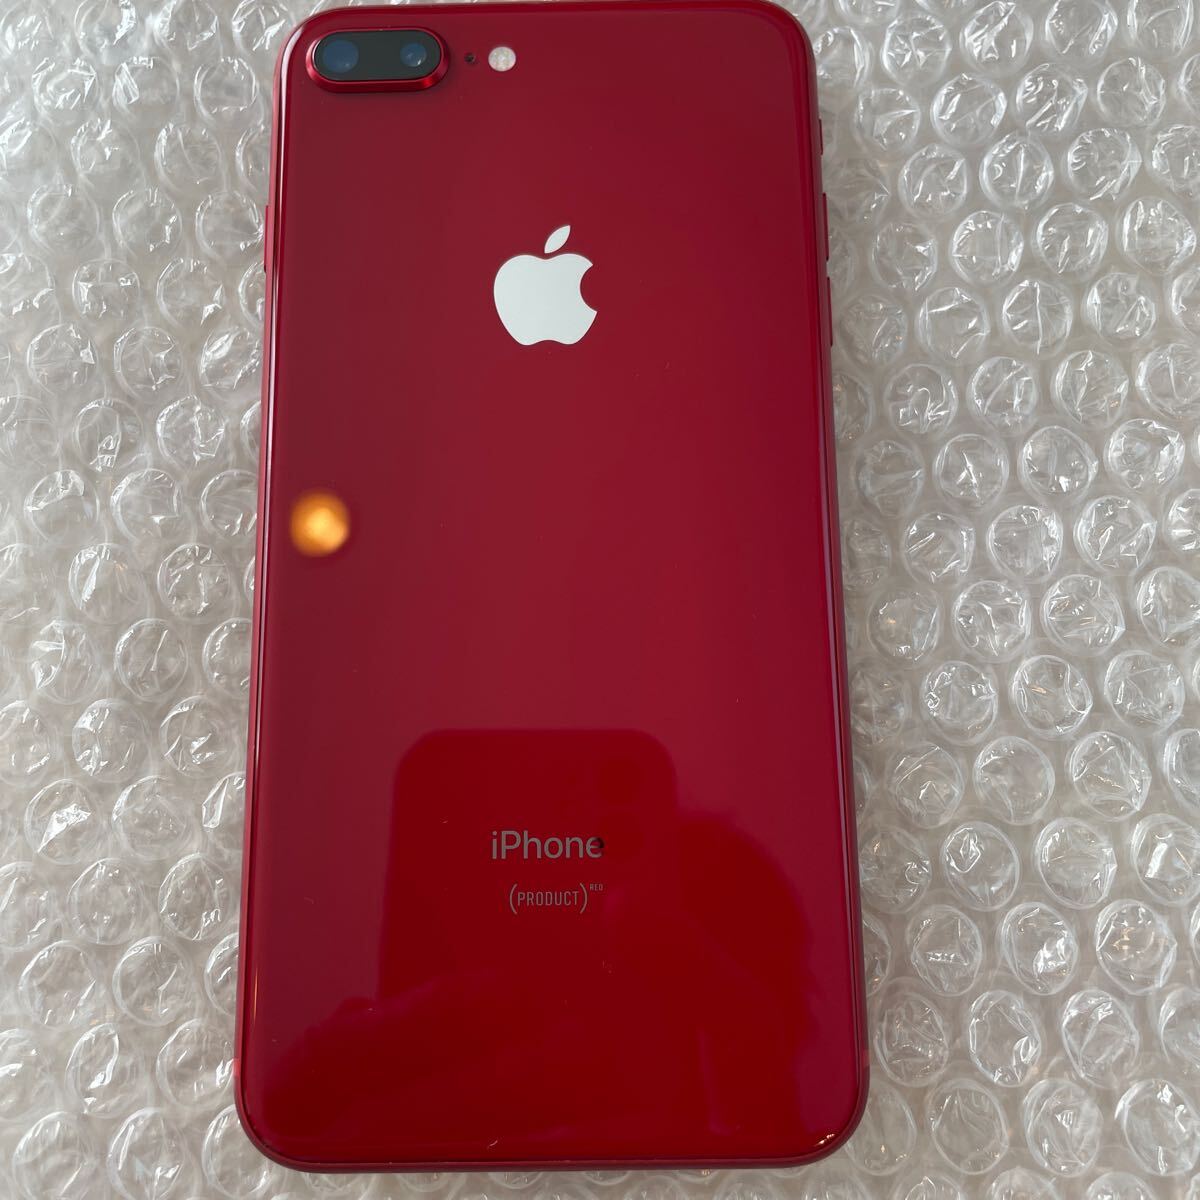 iPhone8　Plus 256GB　SIMフリー PRODUCT RED_画像1